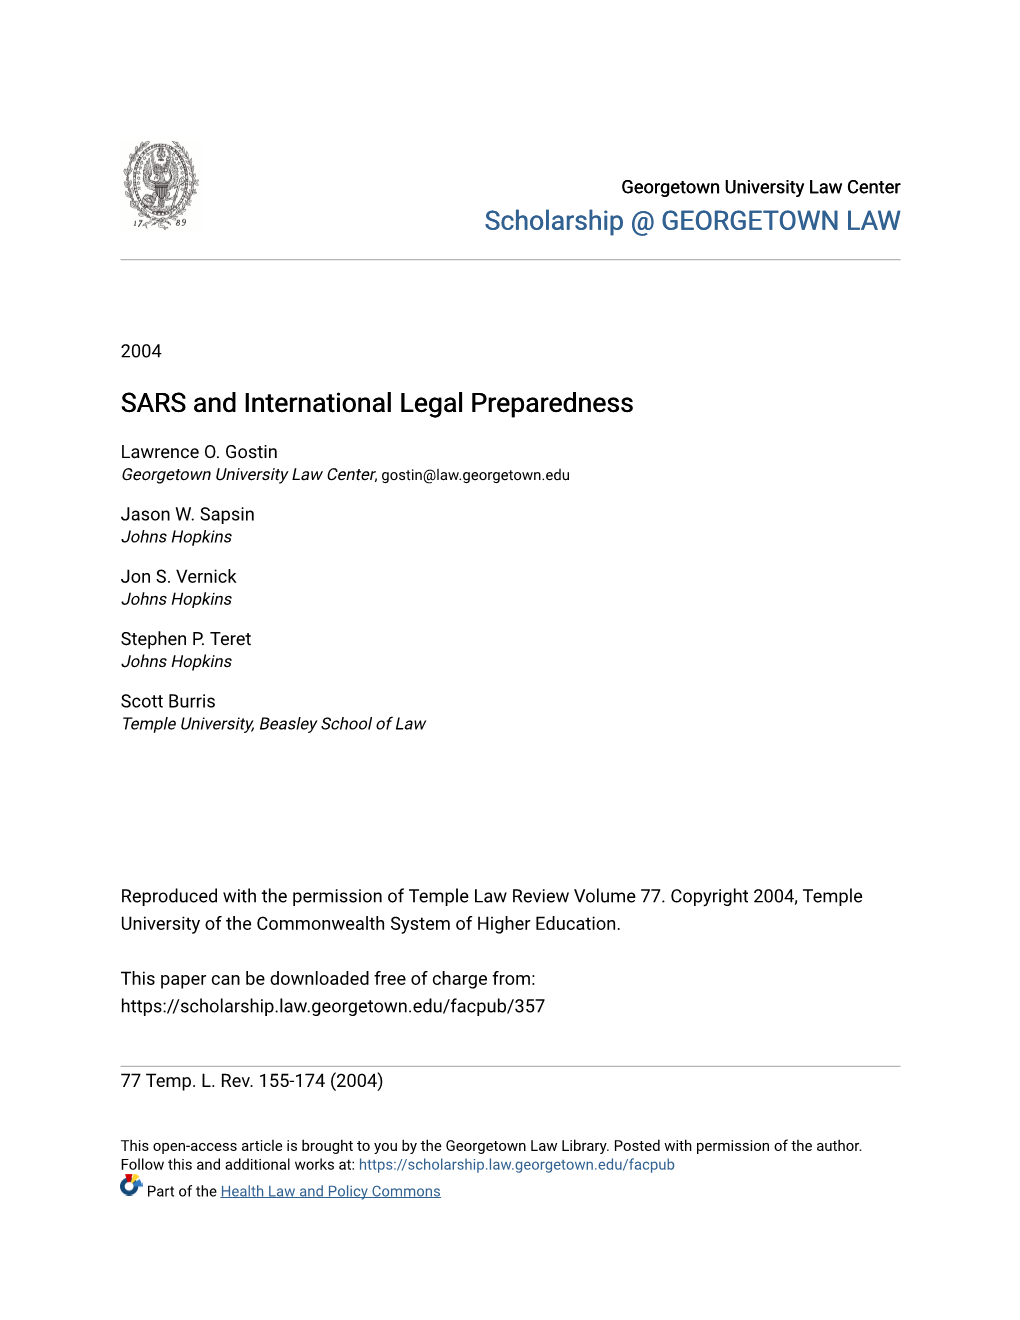 SARS and International Legal Preparedness